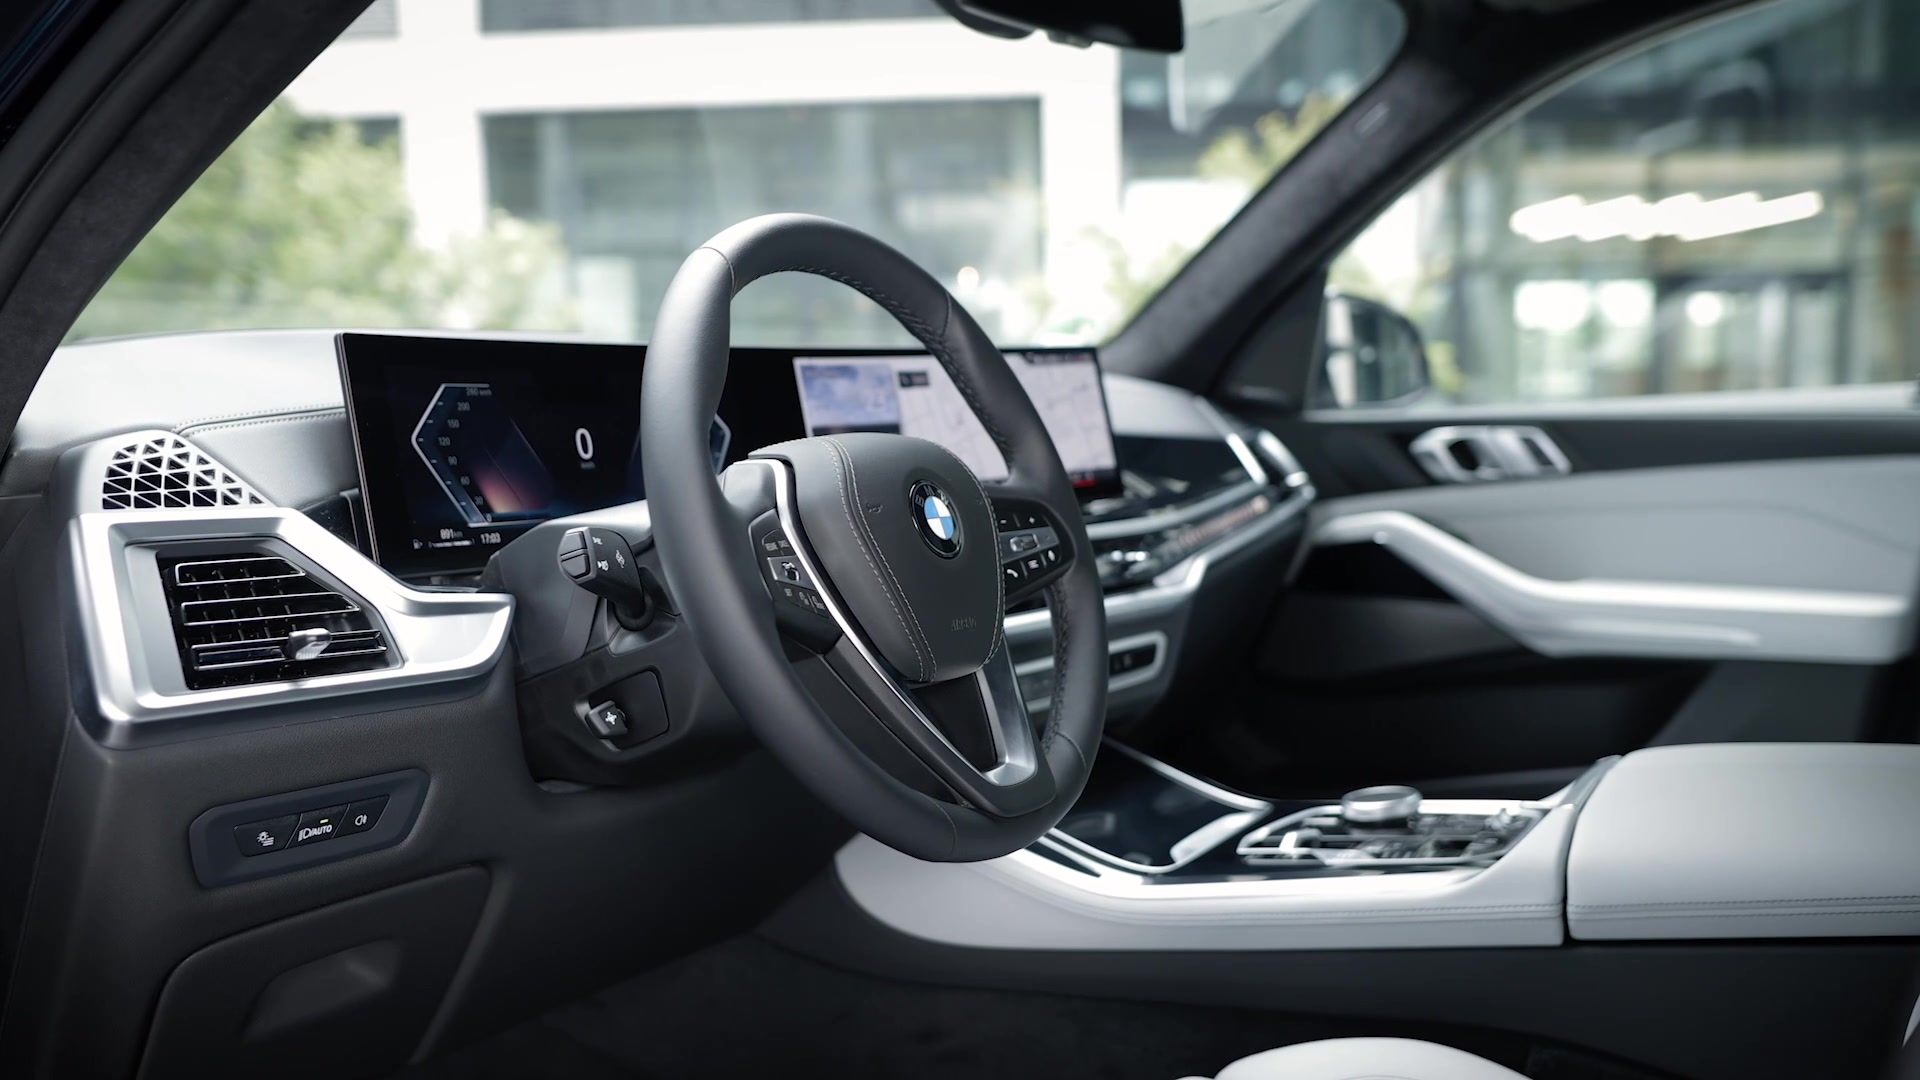 The new BMW X5 xDrive30d Interior Design